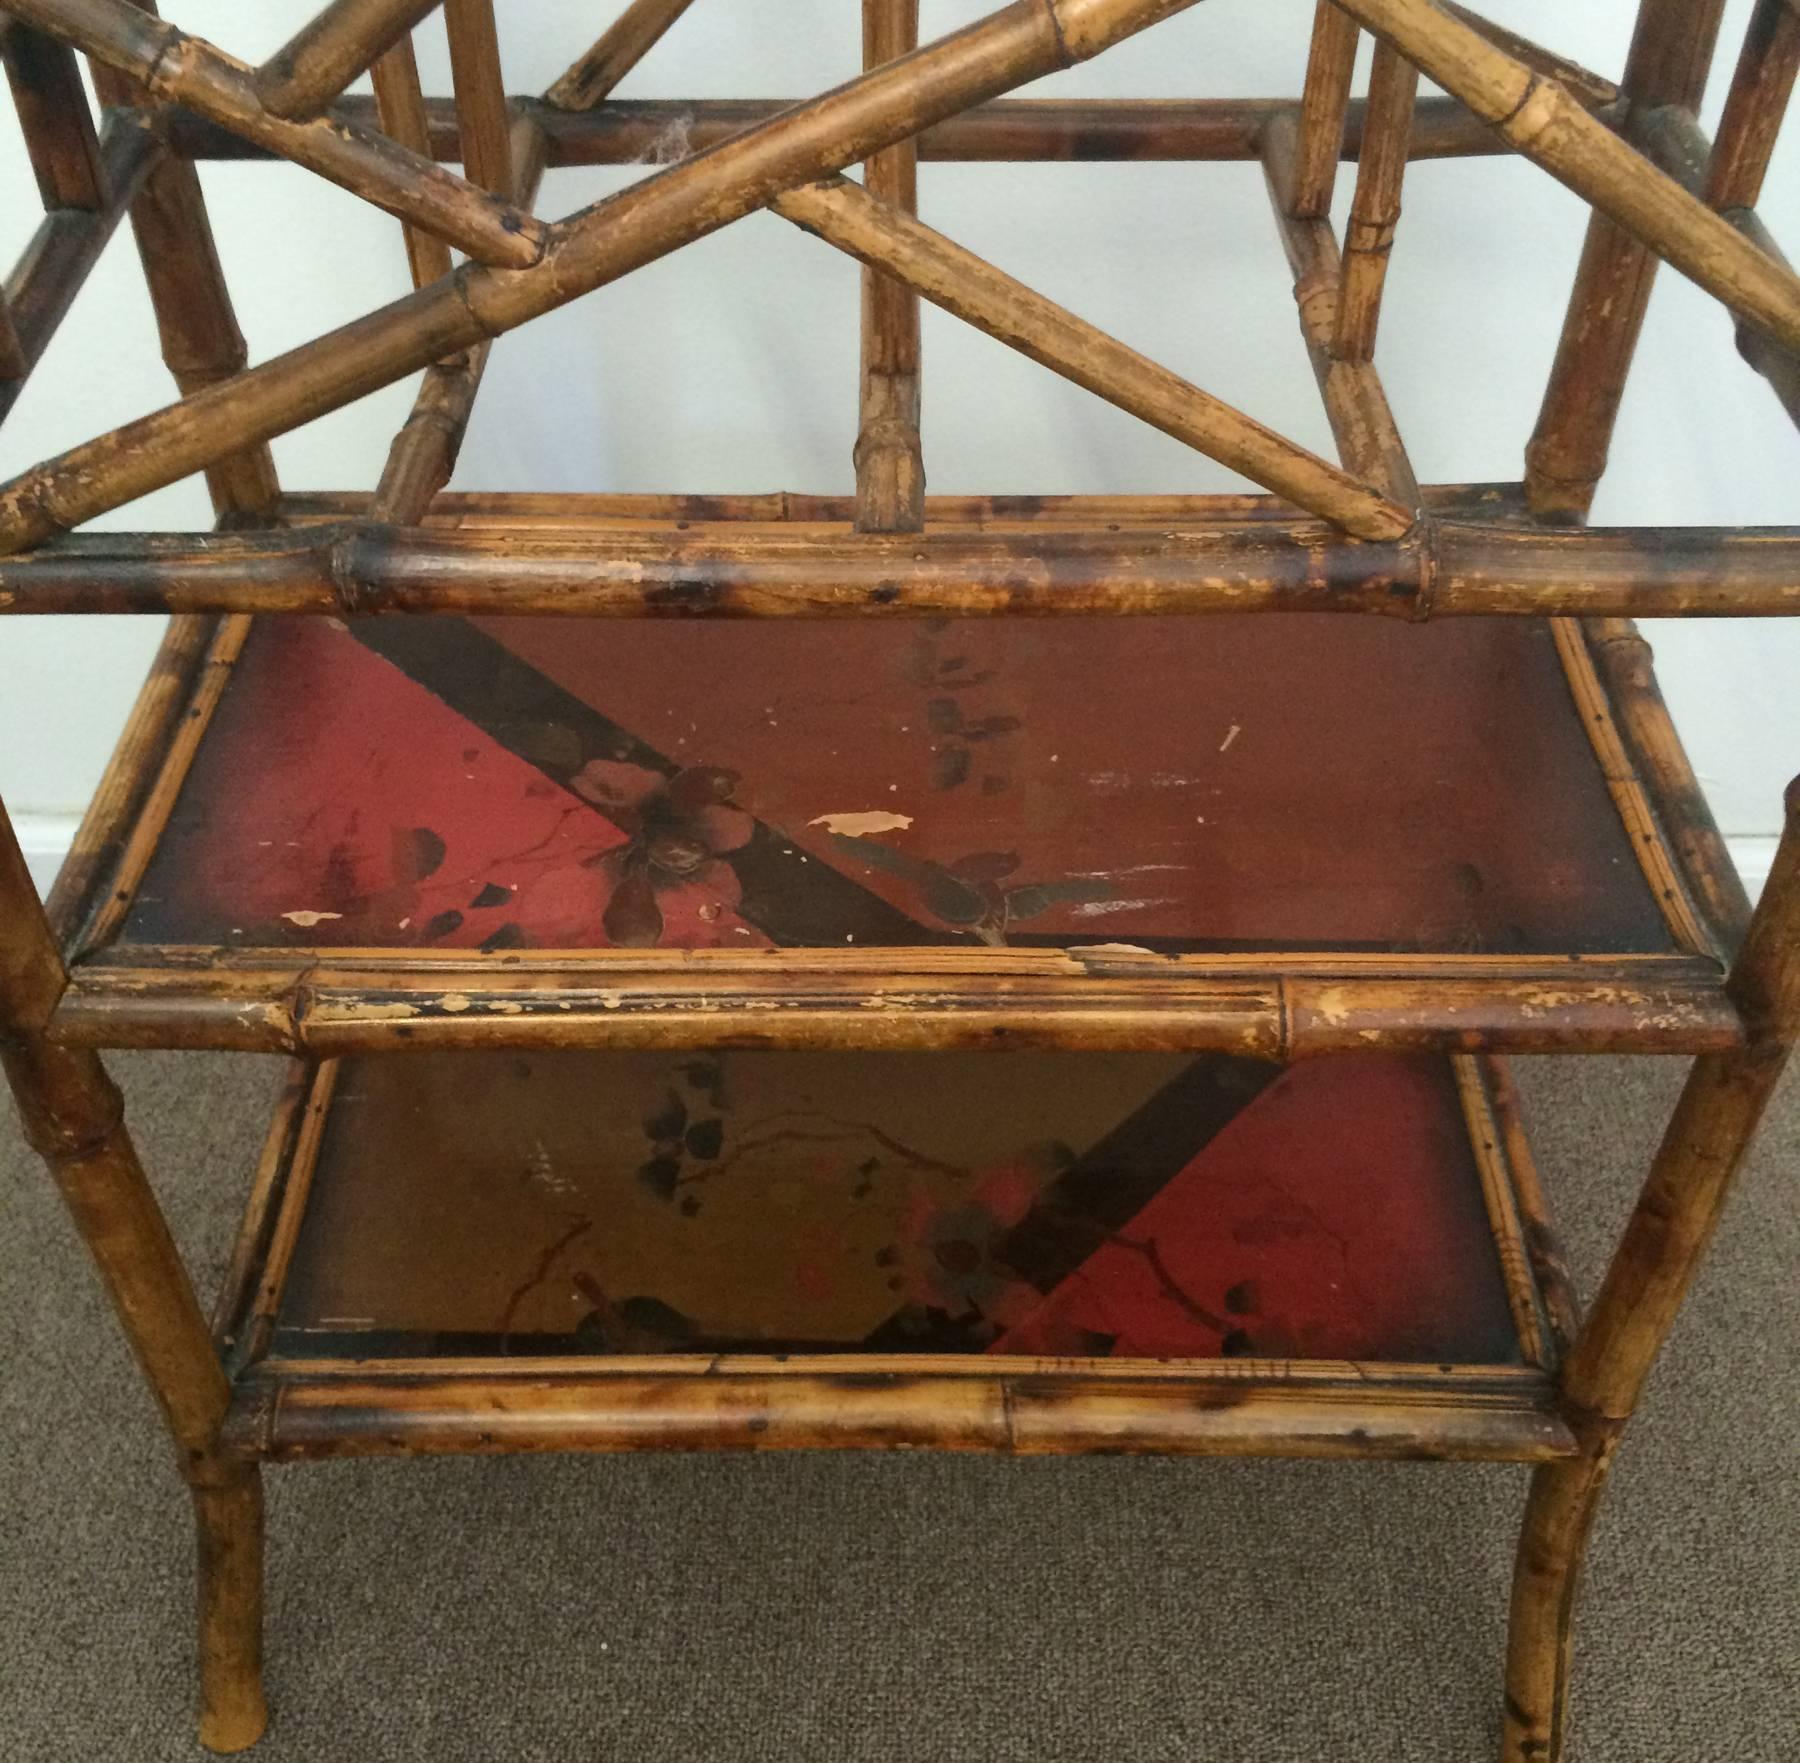 Victorian era English bamboo magazine stand. Retains original finish with original painted panels. Minor loses to finish.